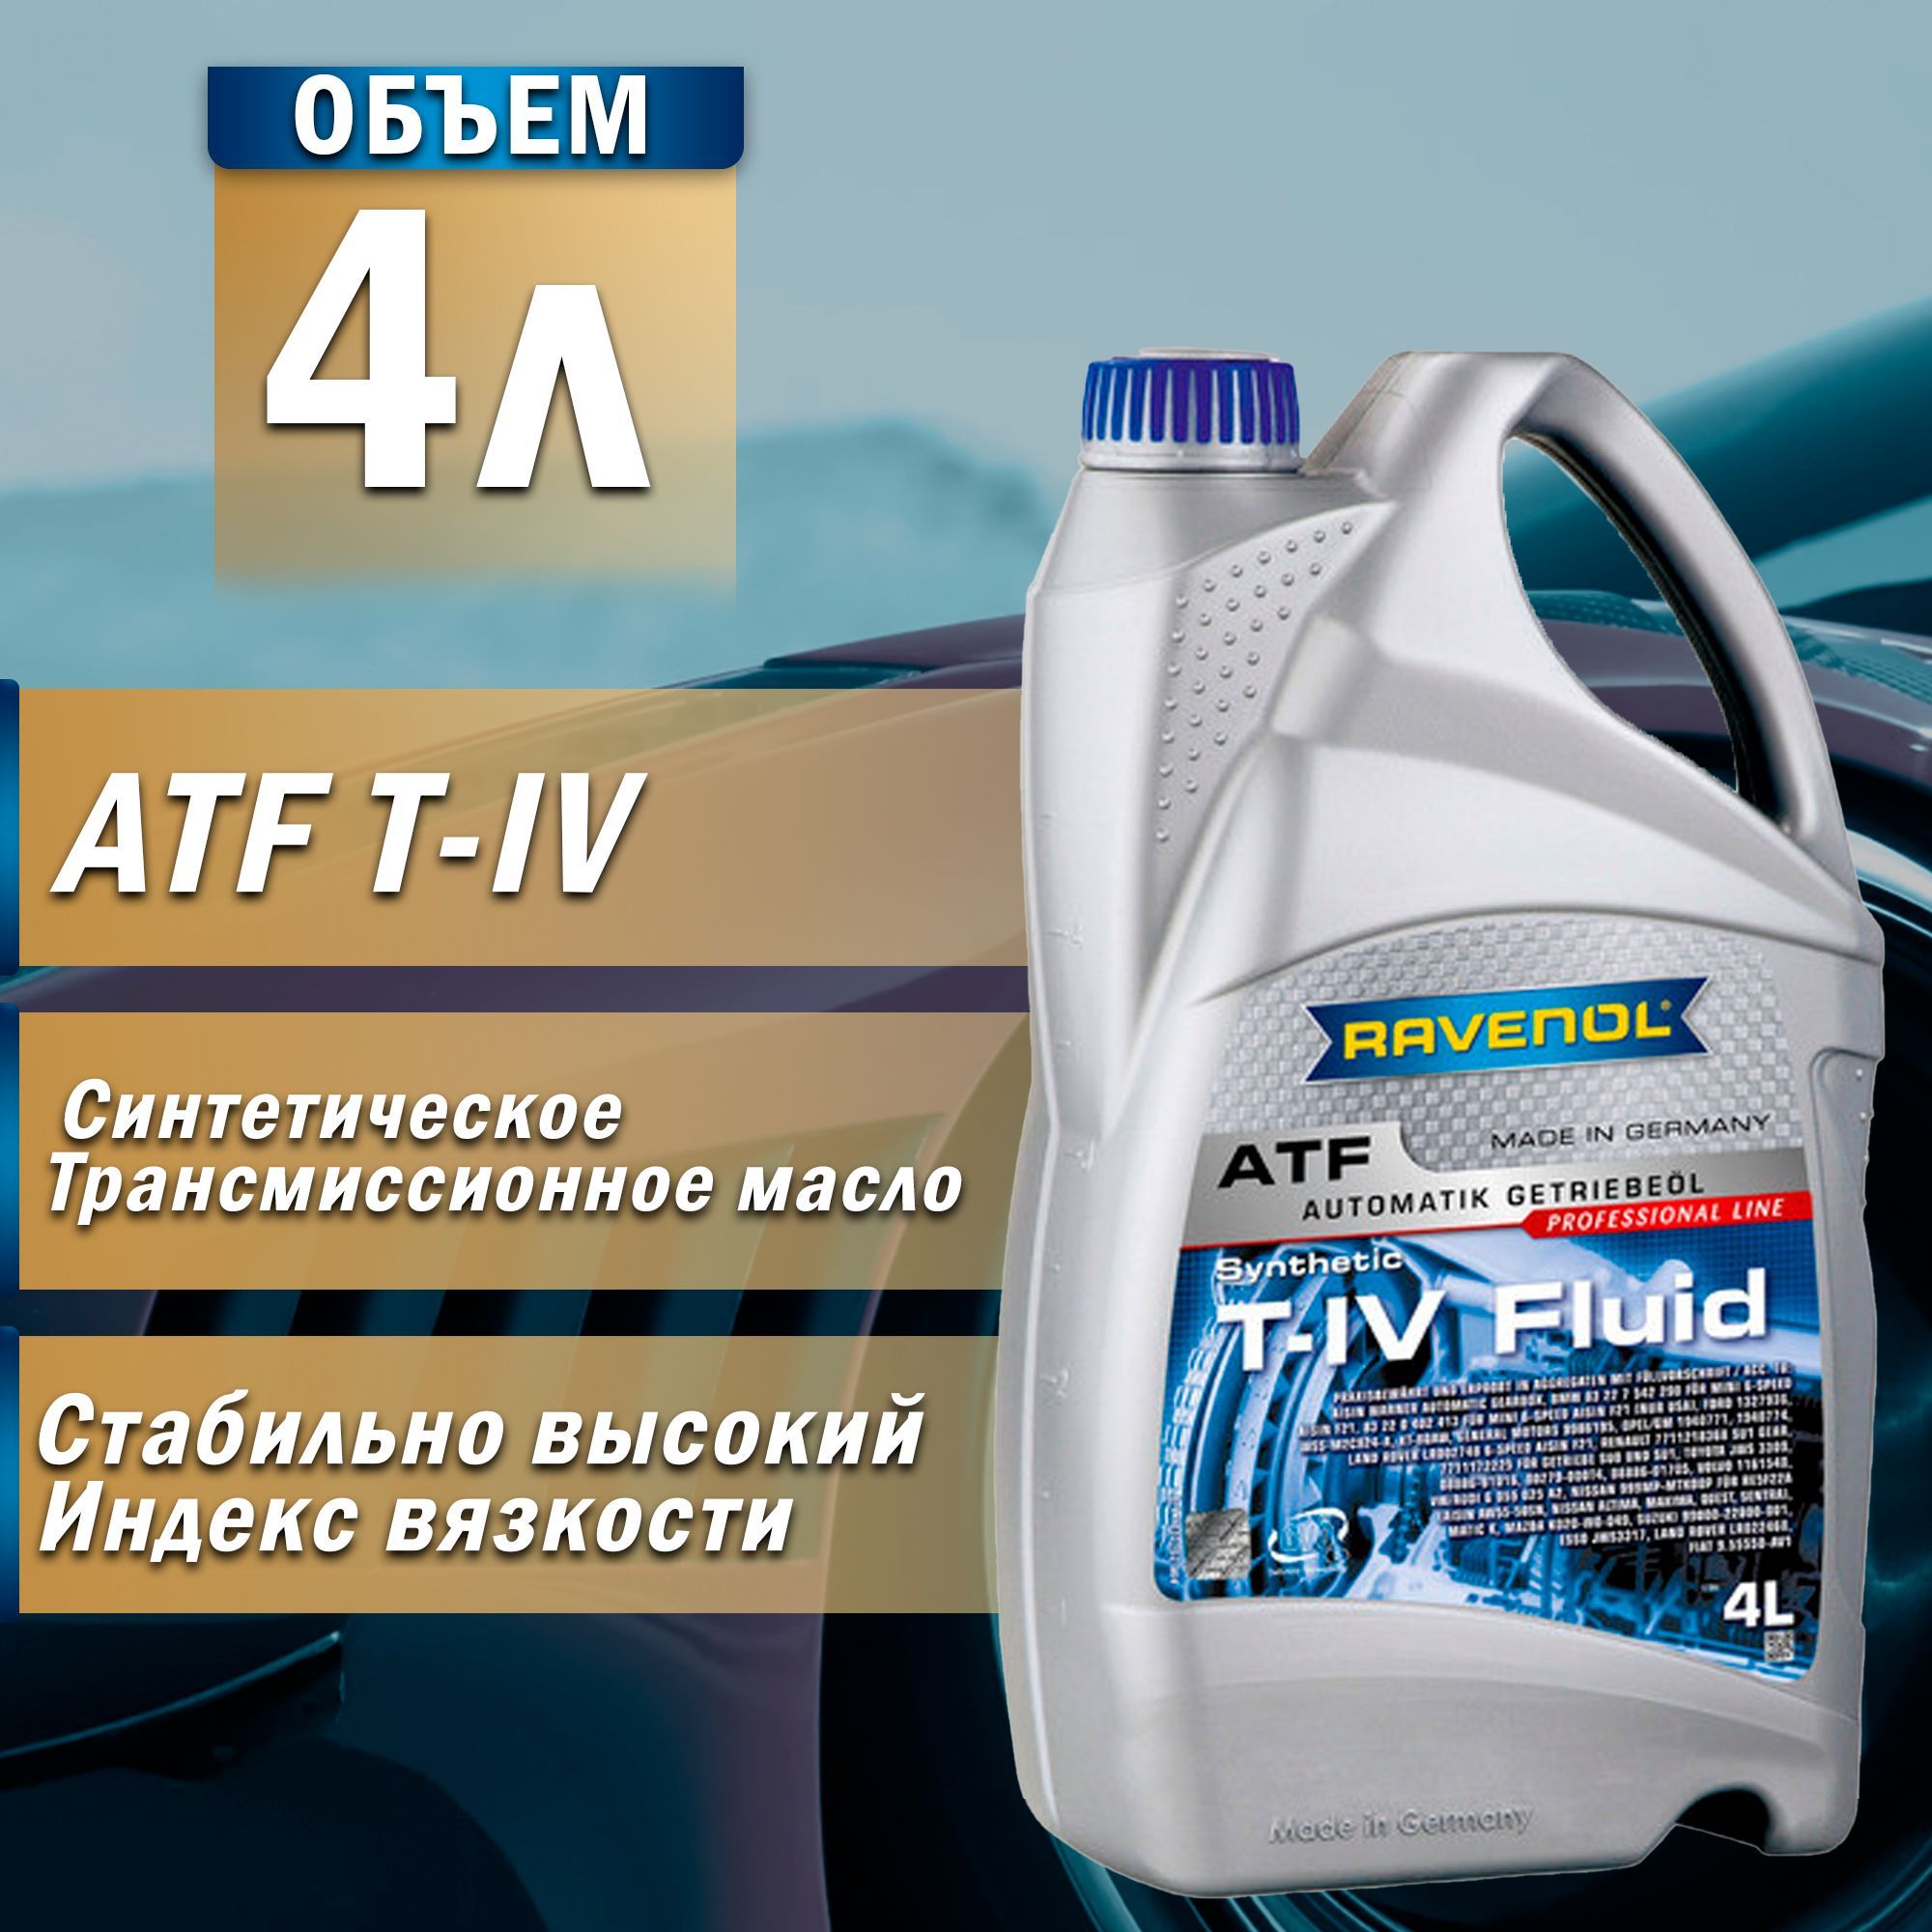 Ravenol atf t ulv. Рансмиссионное масло Ravenol DCT_DSG lv Fluid (4л). ATF+4 Fluid аналоги. Ravenol ATF T-IV Fluid 4л. ATF Type j2/s Fluid 4л.